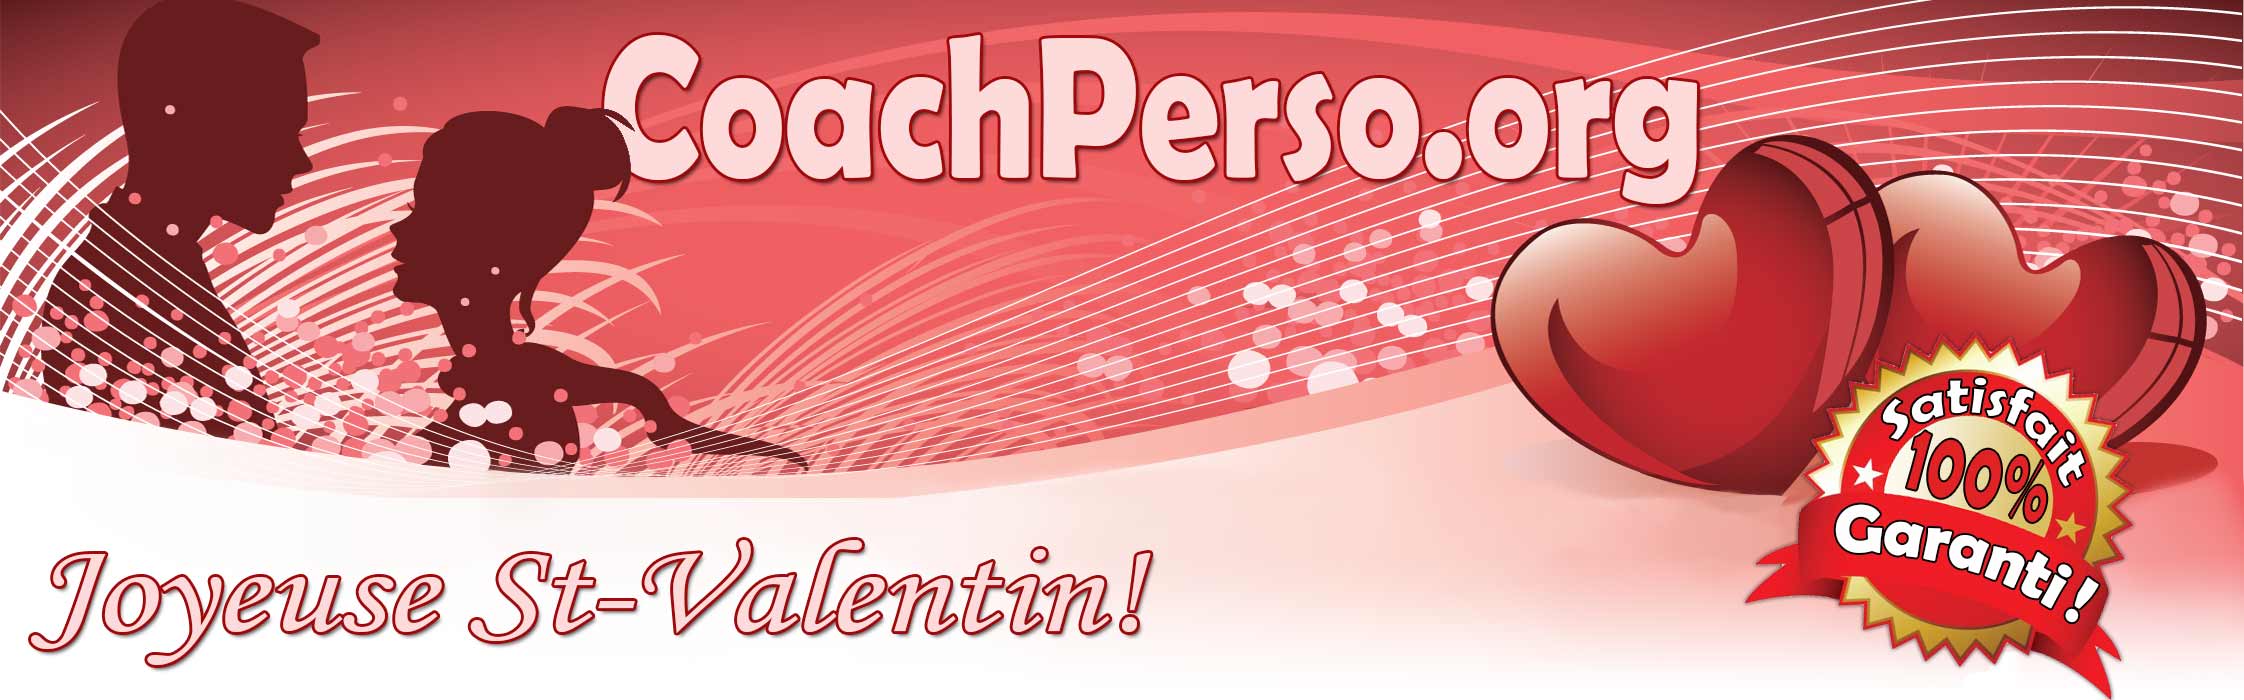 coachperso.org